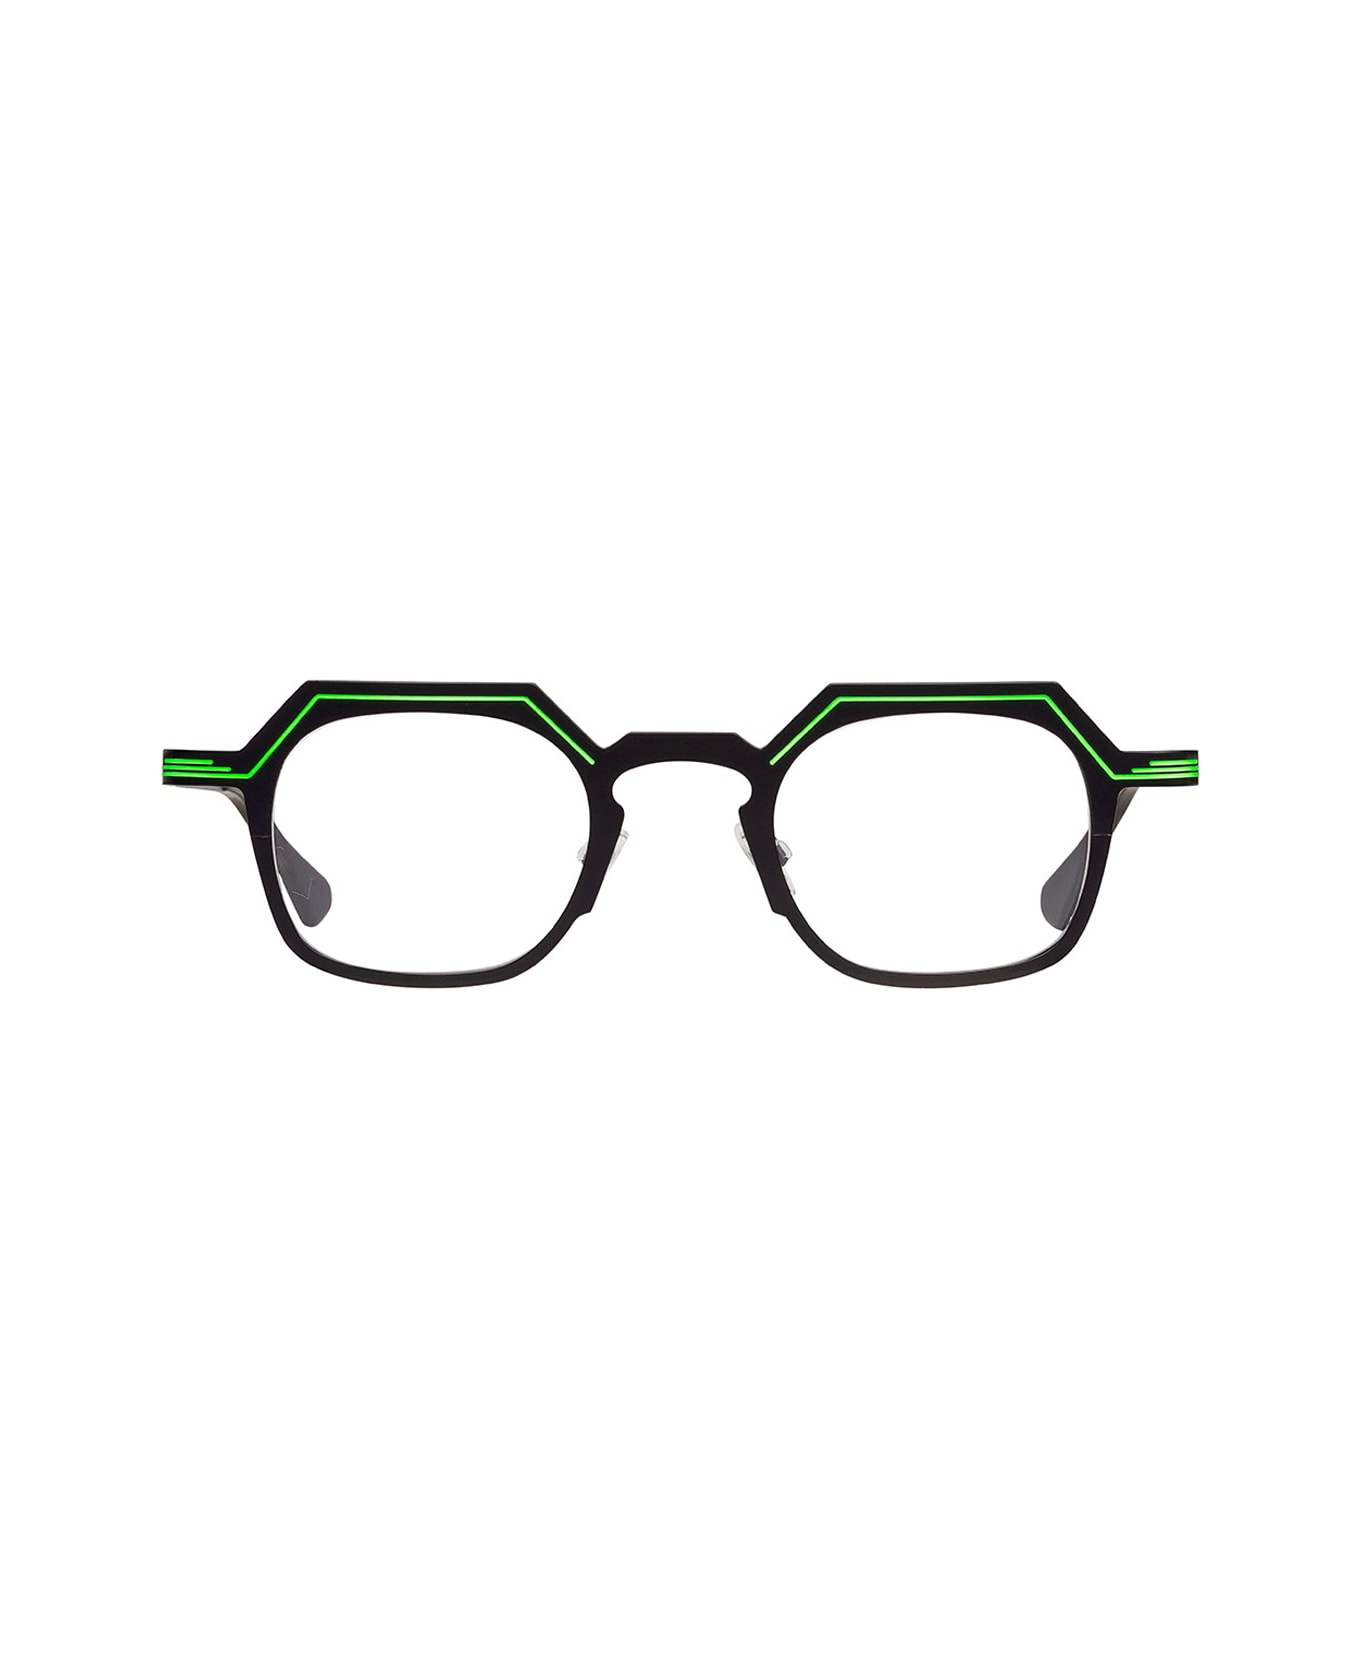 Matttew Delta 1407 Glasses - Nero アイウェア